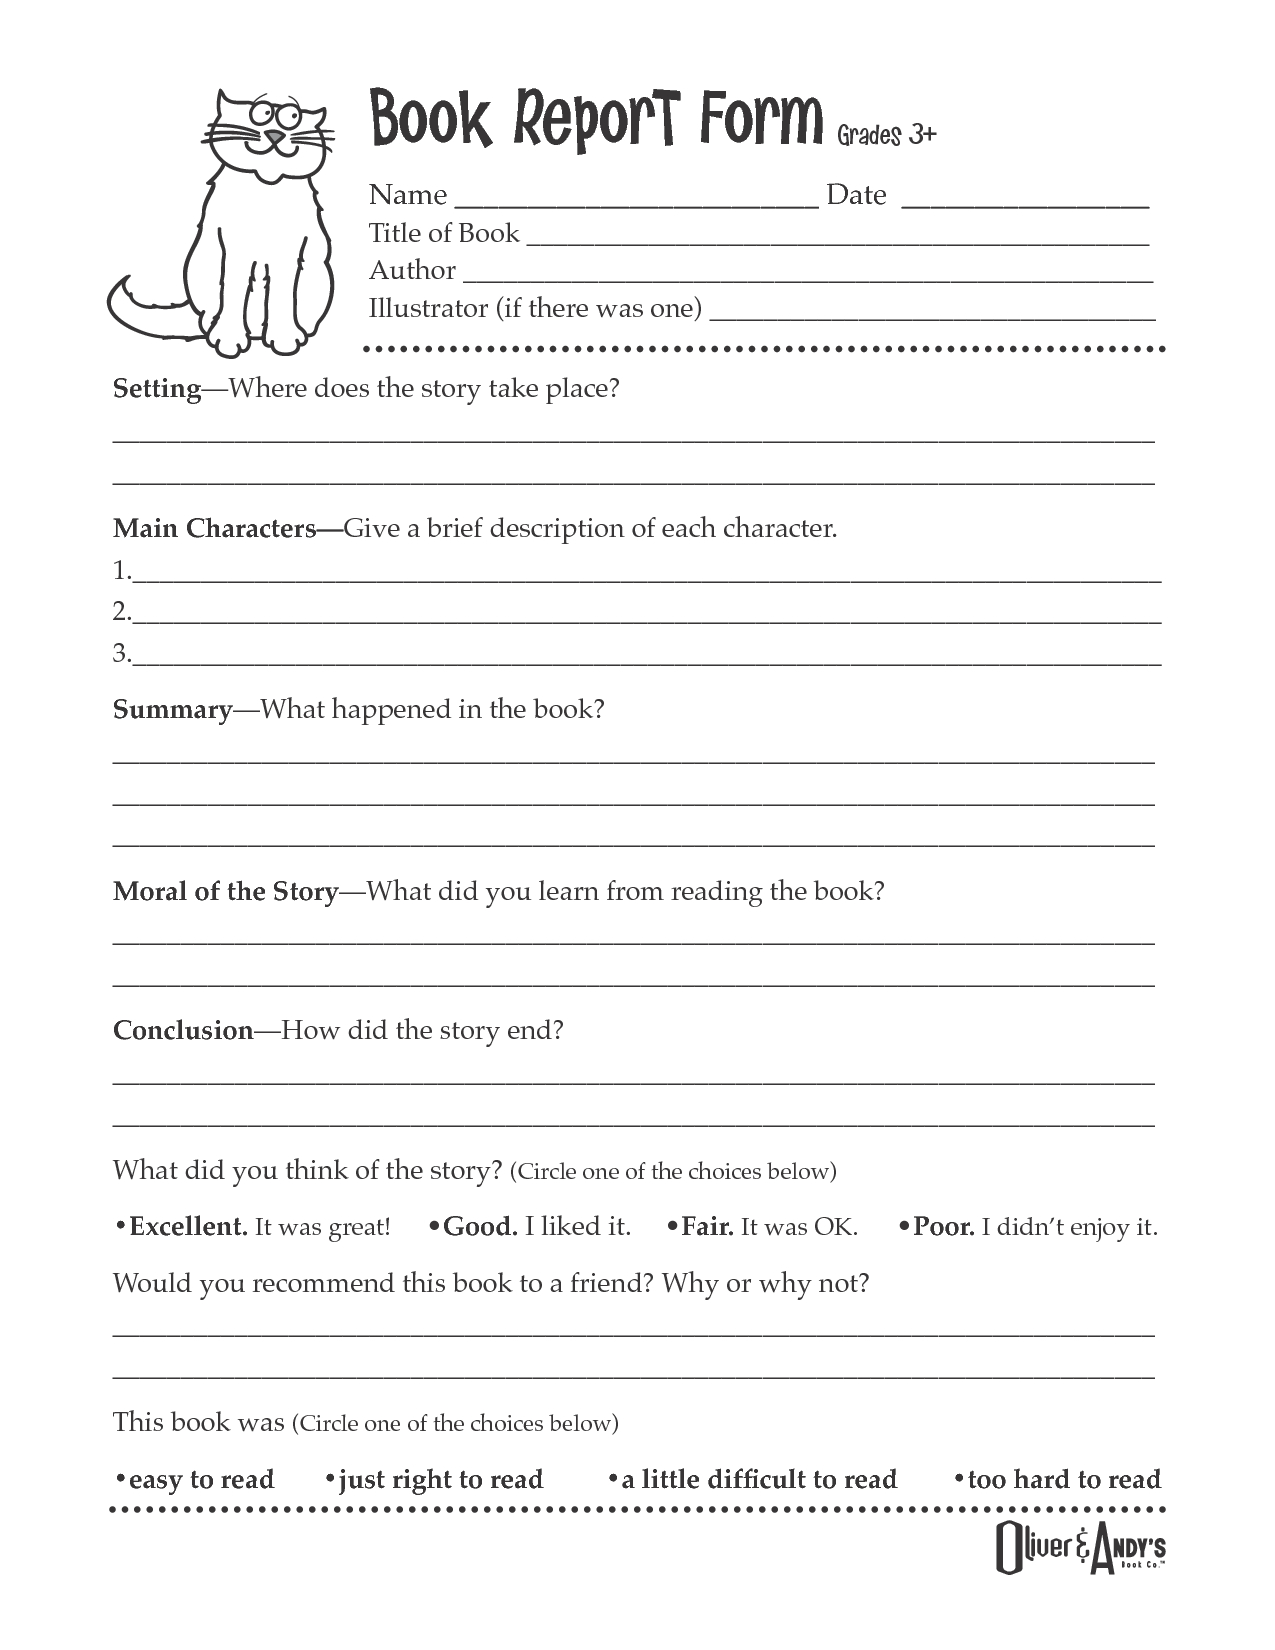 Second Grade Book Report Template | Book Report Form Grades Intended For Book Report Template 3Rd Grade